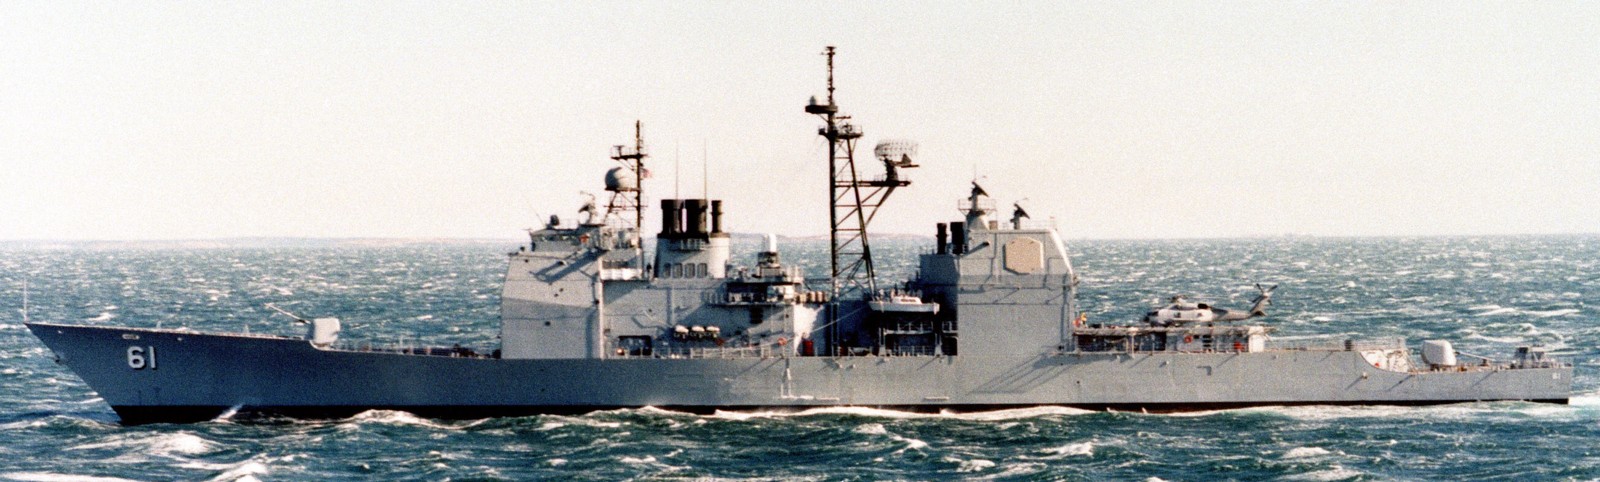 cg-61 uss monterey ticonderoga class guided missile cruiser aegis us navy sea trials 143